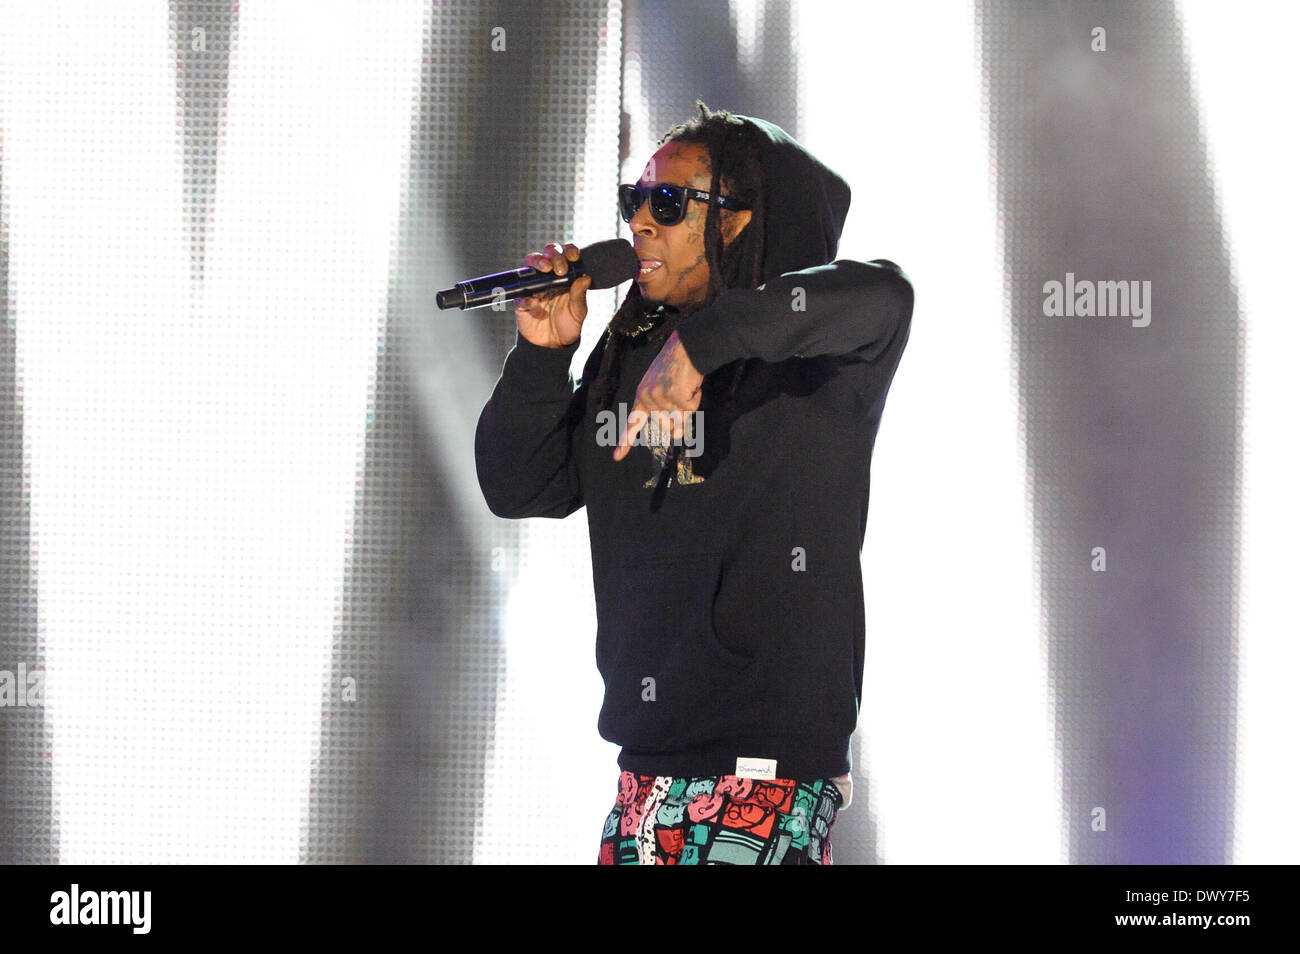 Austin, Texas, USA. 13. März 2014. Lil Wayne begrüßt das Publikum zum Jahresbeginn die MtvU Woodie Awards beim SXSW am 13. März 2014 in Austin, Texas - USA. Bildnachweis: Manuel Nauta/NurPhoto/ZUMAPRESS.com/Alamy Live-Nachrichten Stockfoto